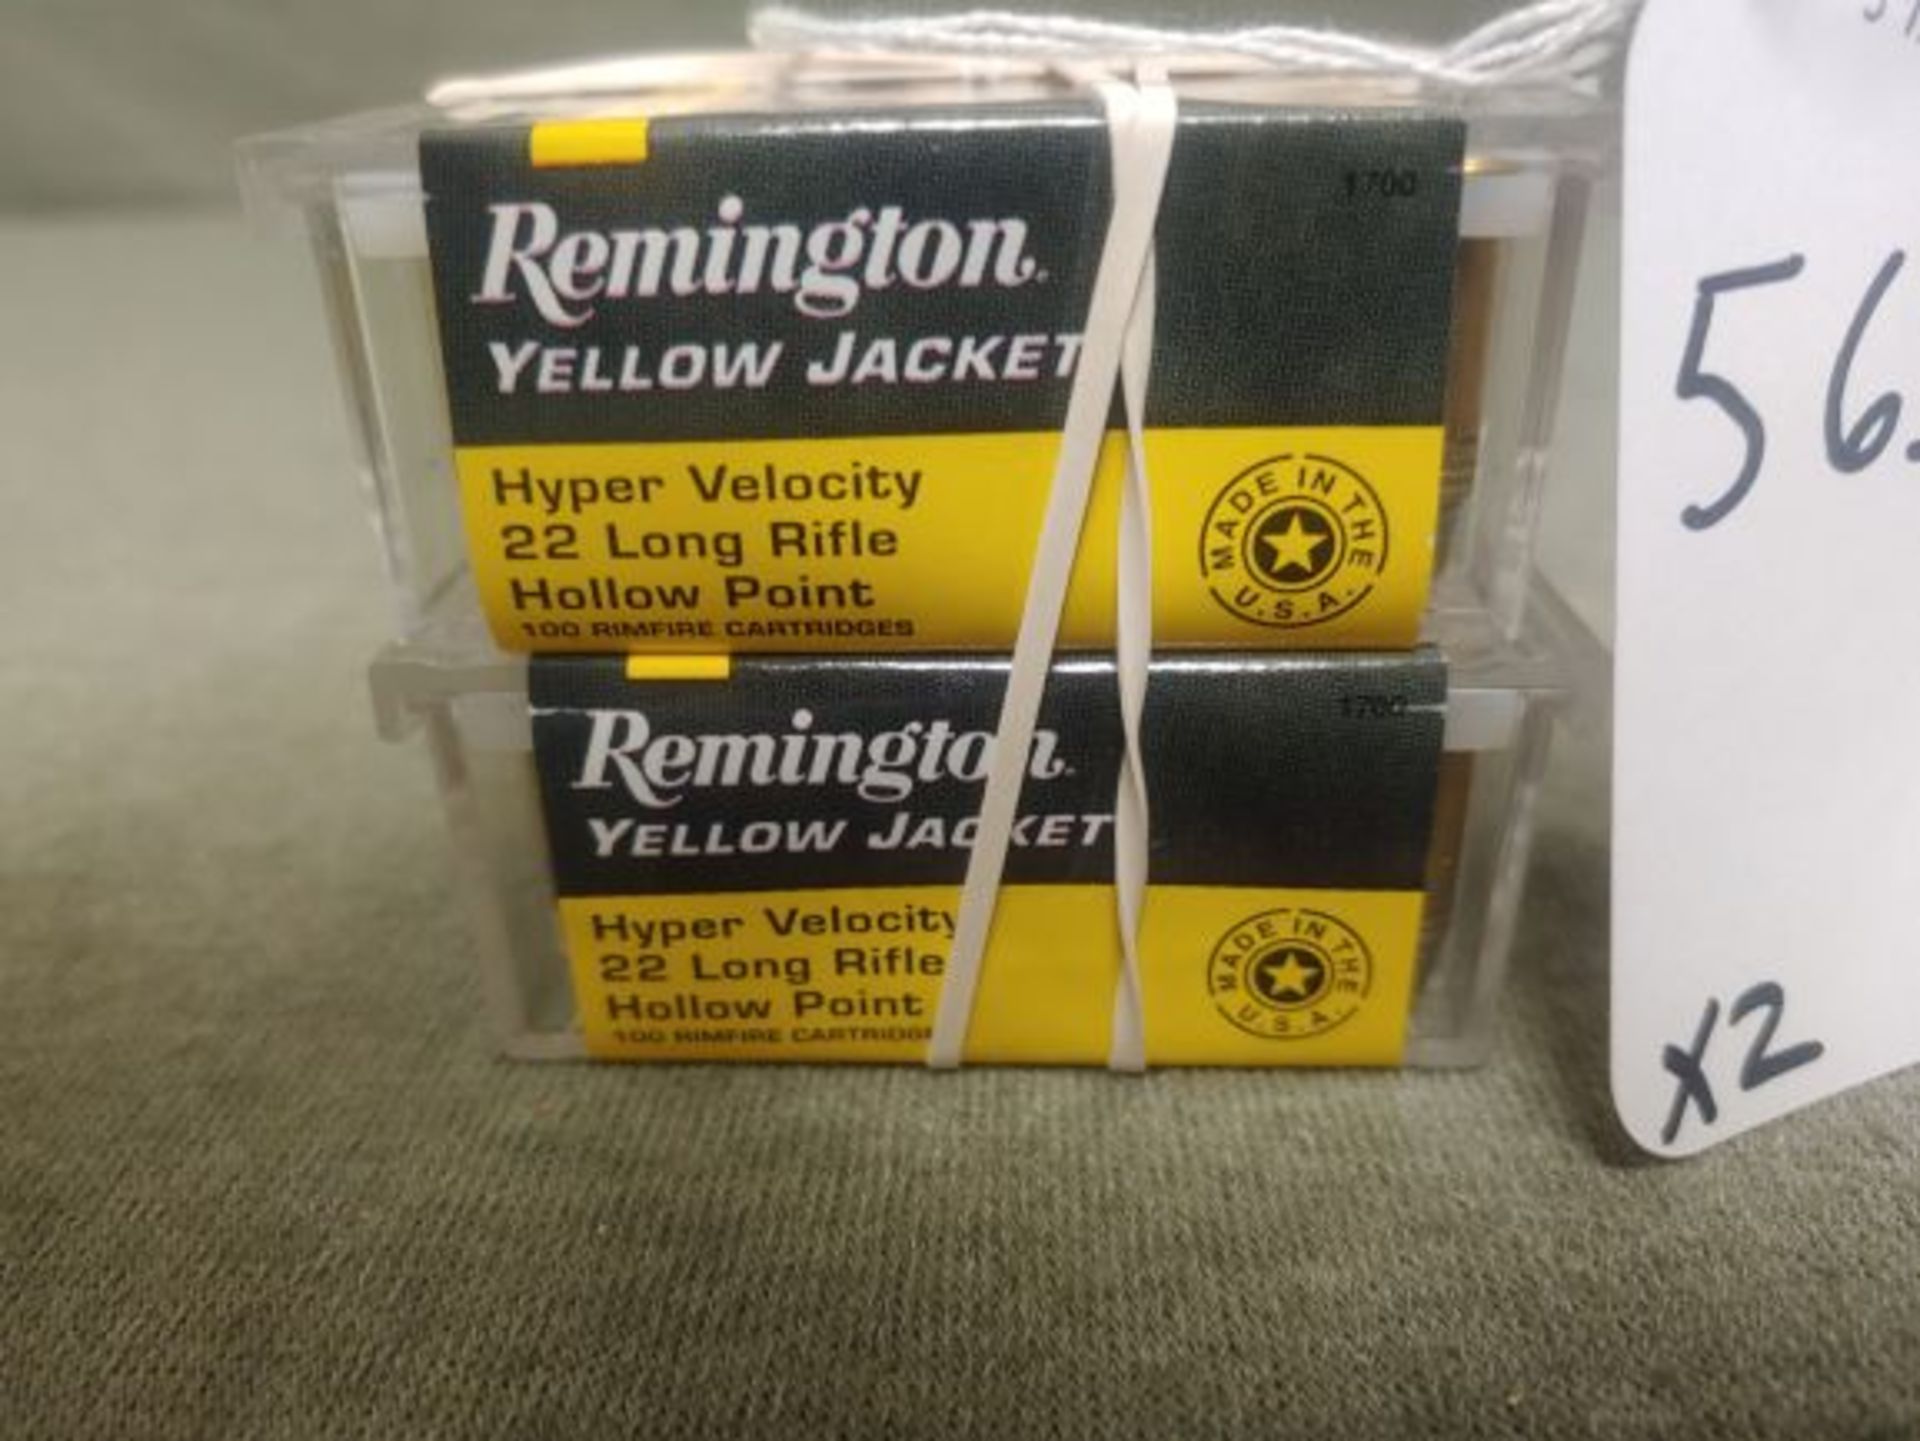 565 Rem Yellow Jacket Hyper Velocity .22LR HP, 100 Rnd. Box (2x the Money) - Image 2 of 2